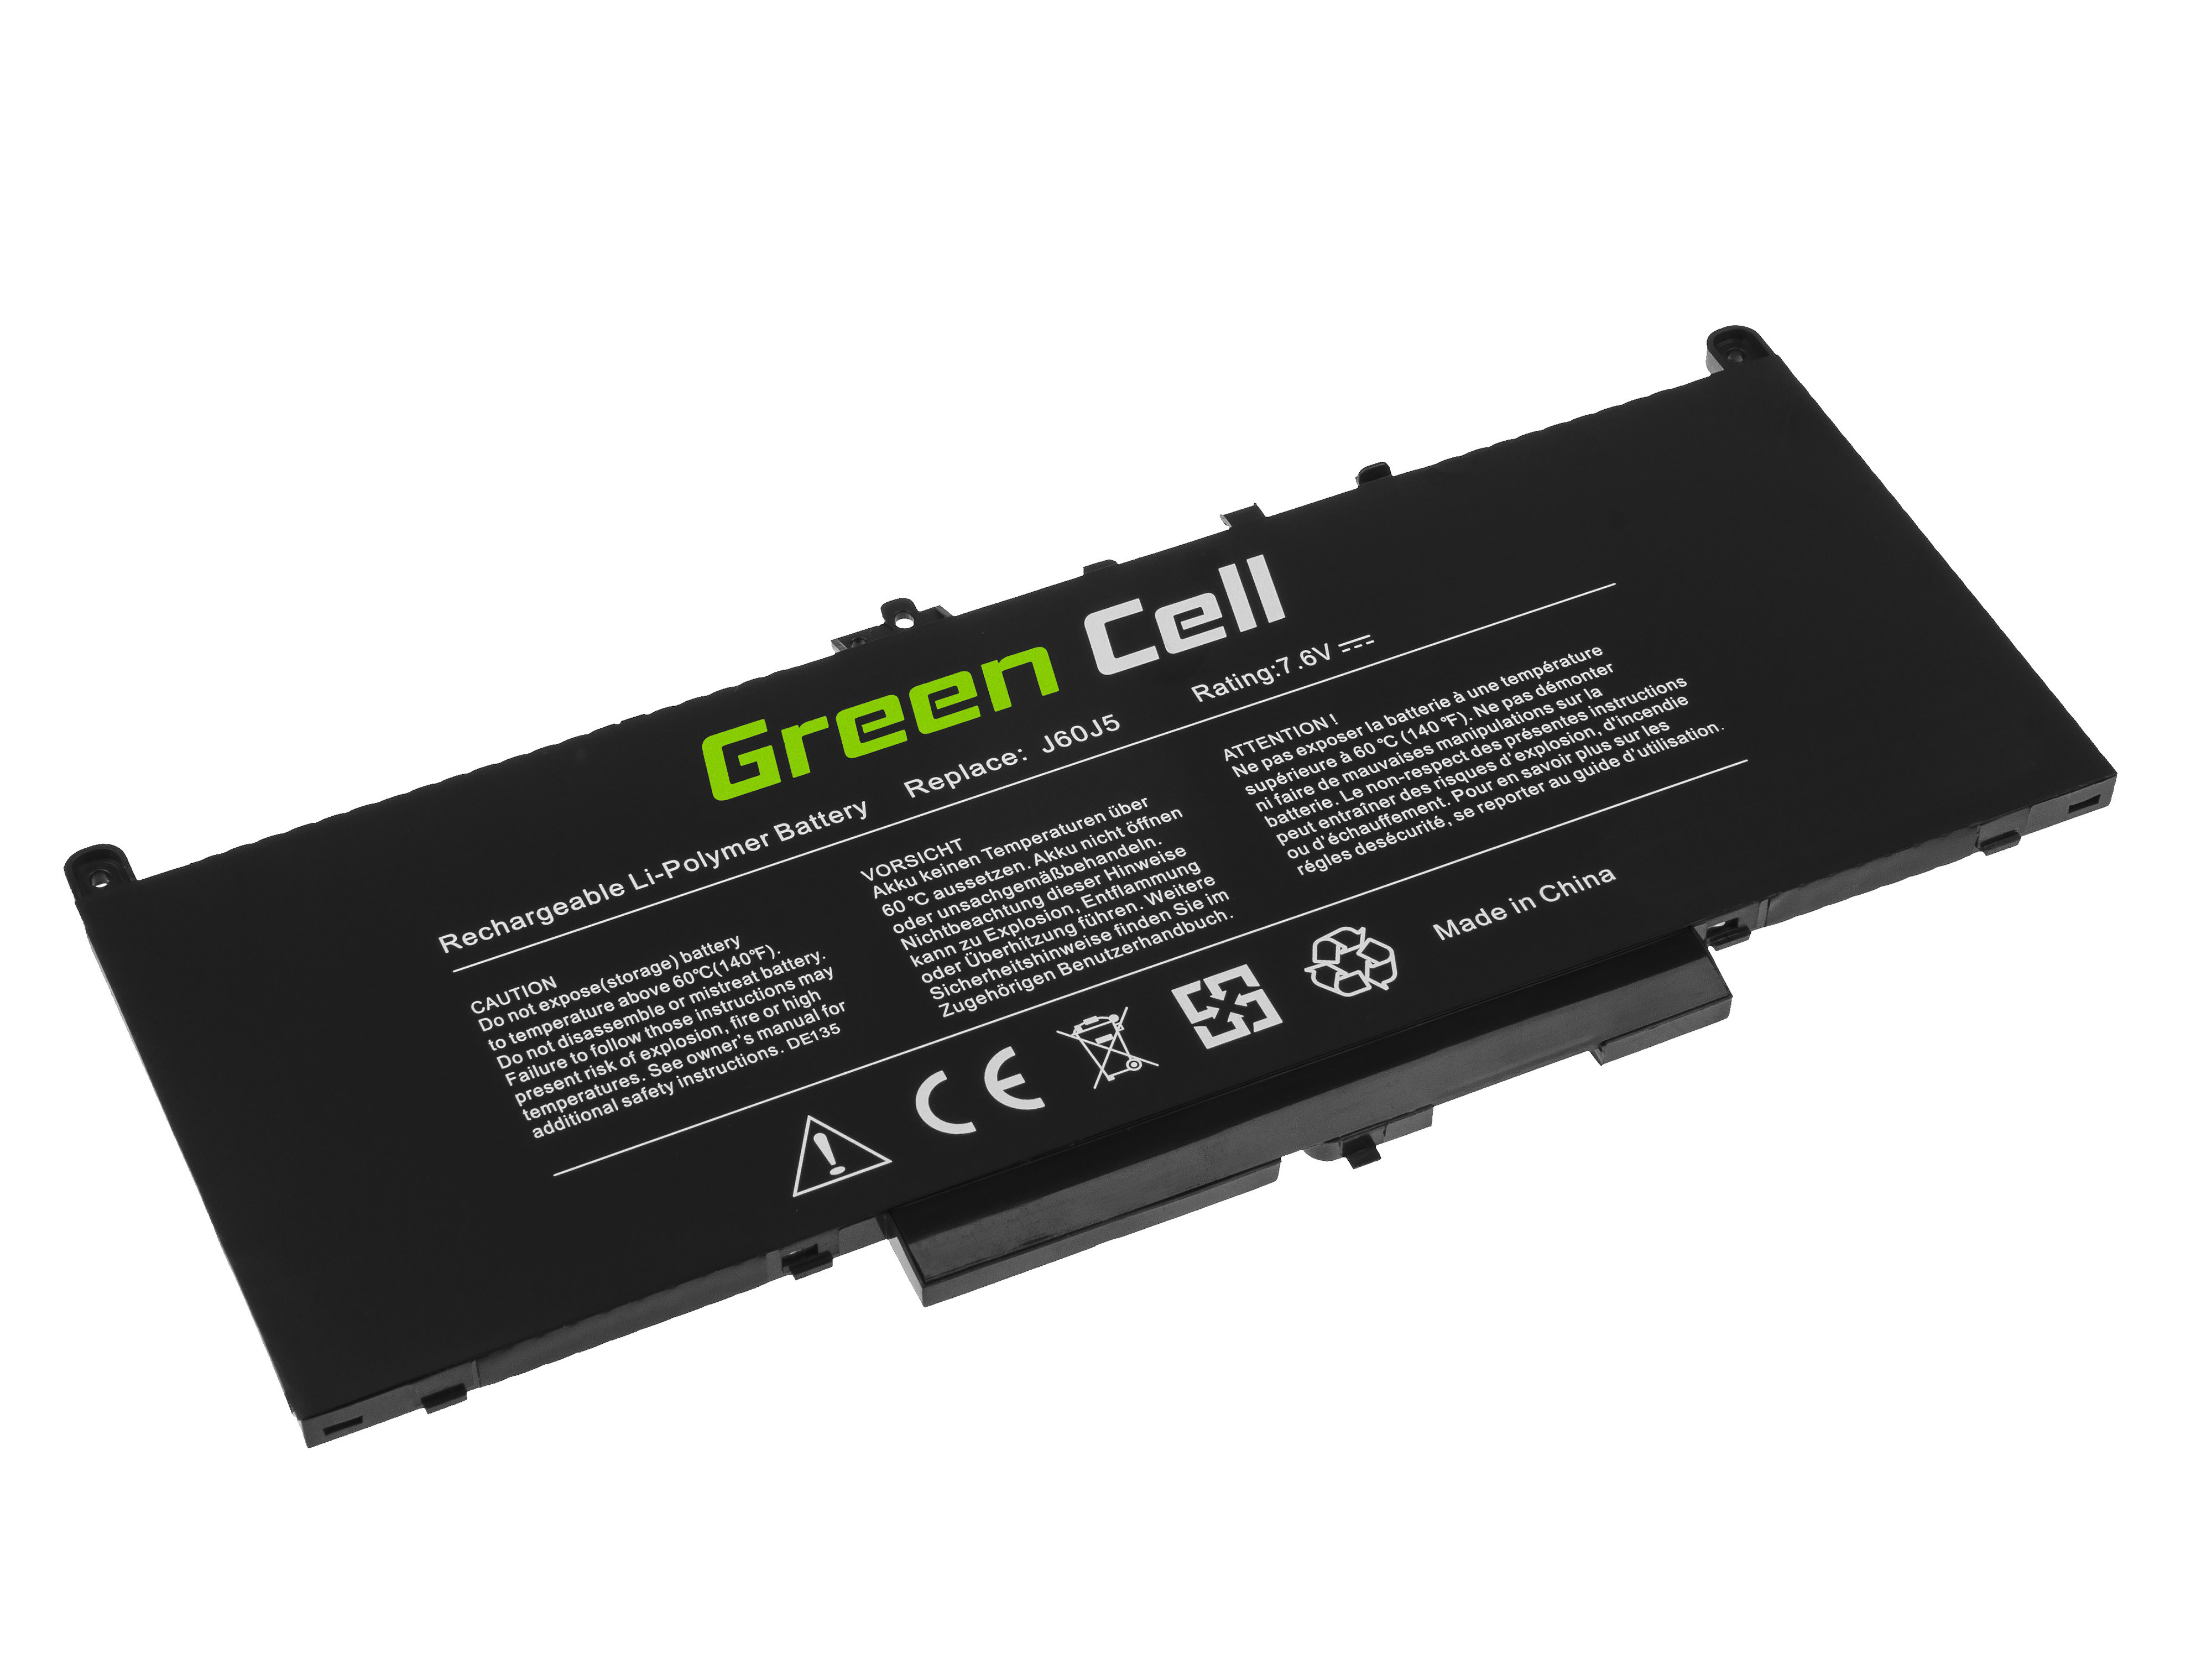 Green Cell Laptop Akku (DE135) - J60J5 für Dell Latitude E7270 E7470